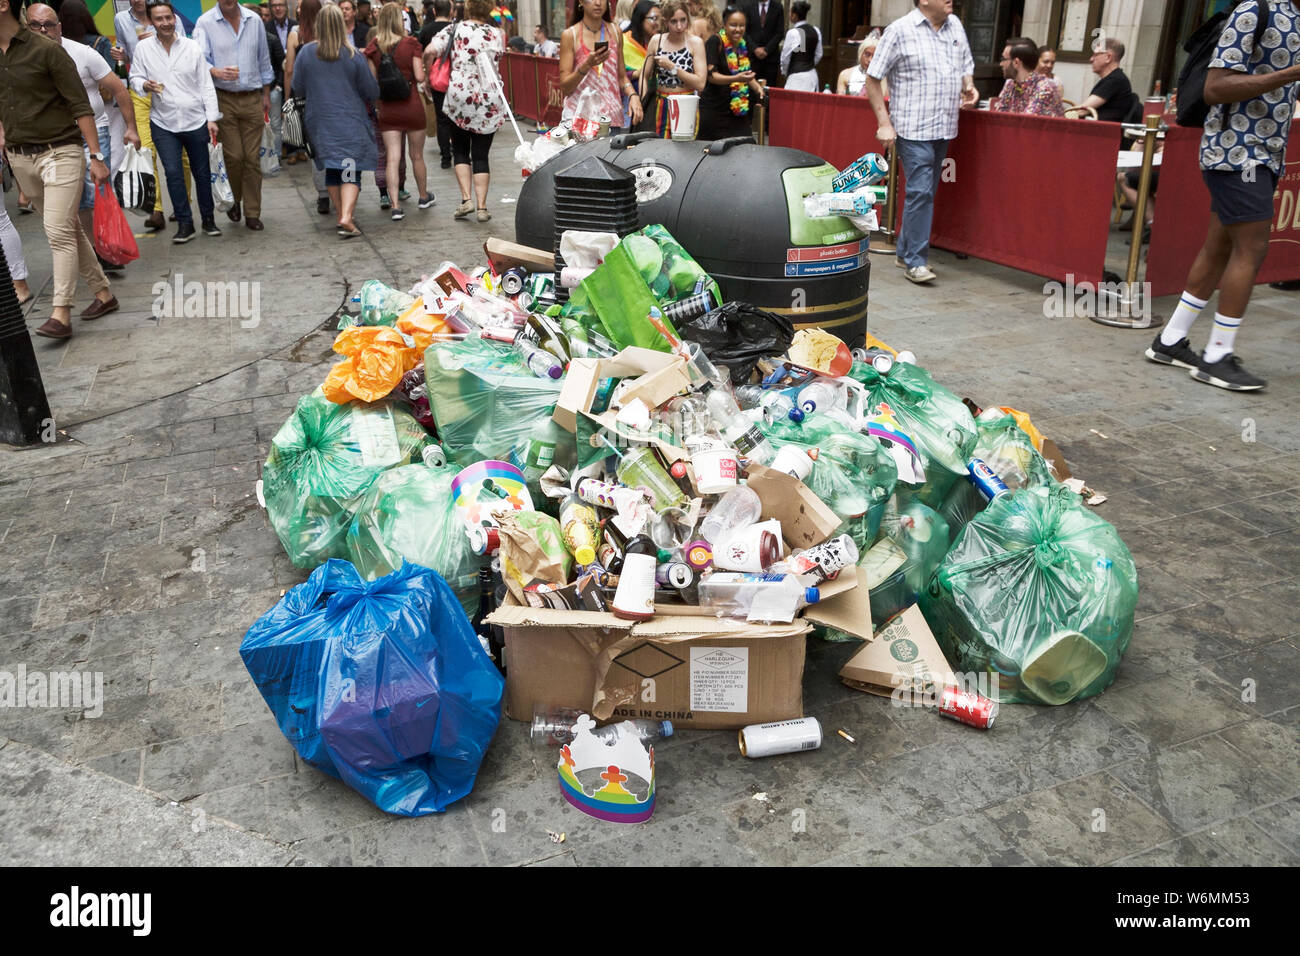 Street rubbish: plastic waste, consumerism, consumer rubbish, consumer waste, bins overflowing. London rubbish. Keep Britain tidy. Stock Photo